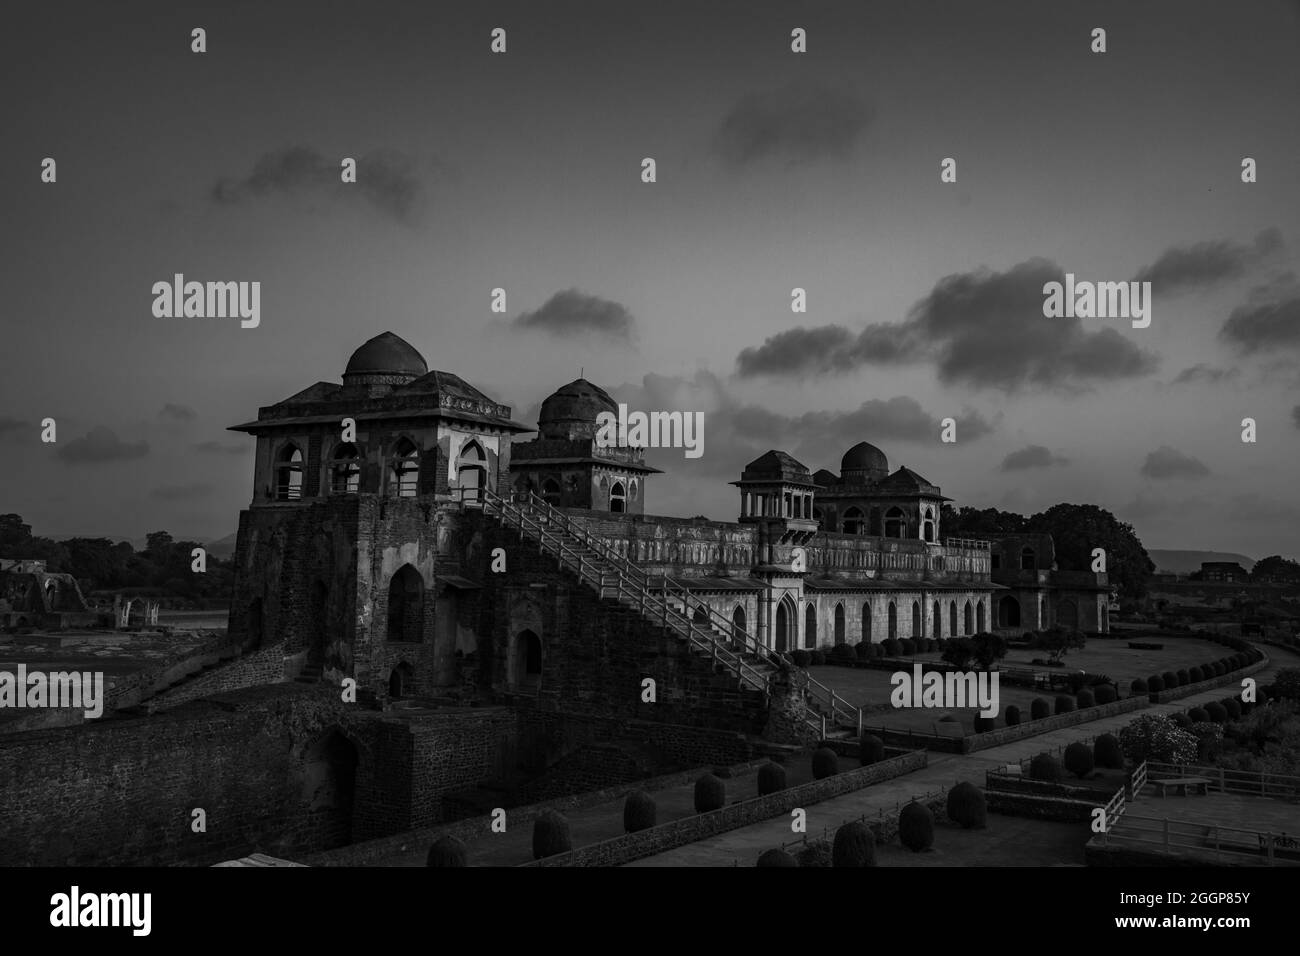 Jahaz Mahal royal complex, Mandu, Madhya Pradesh, India Stock Photo